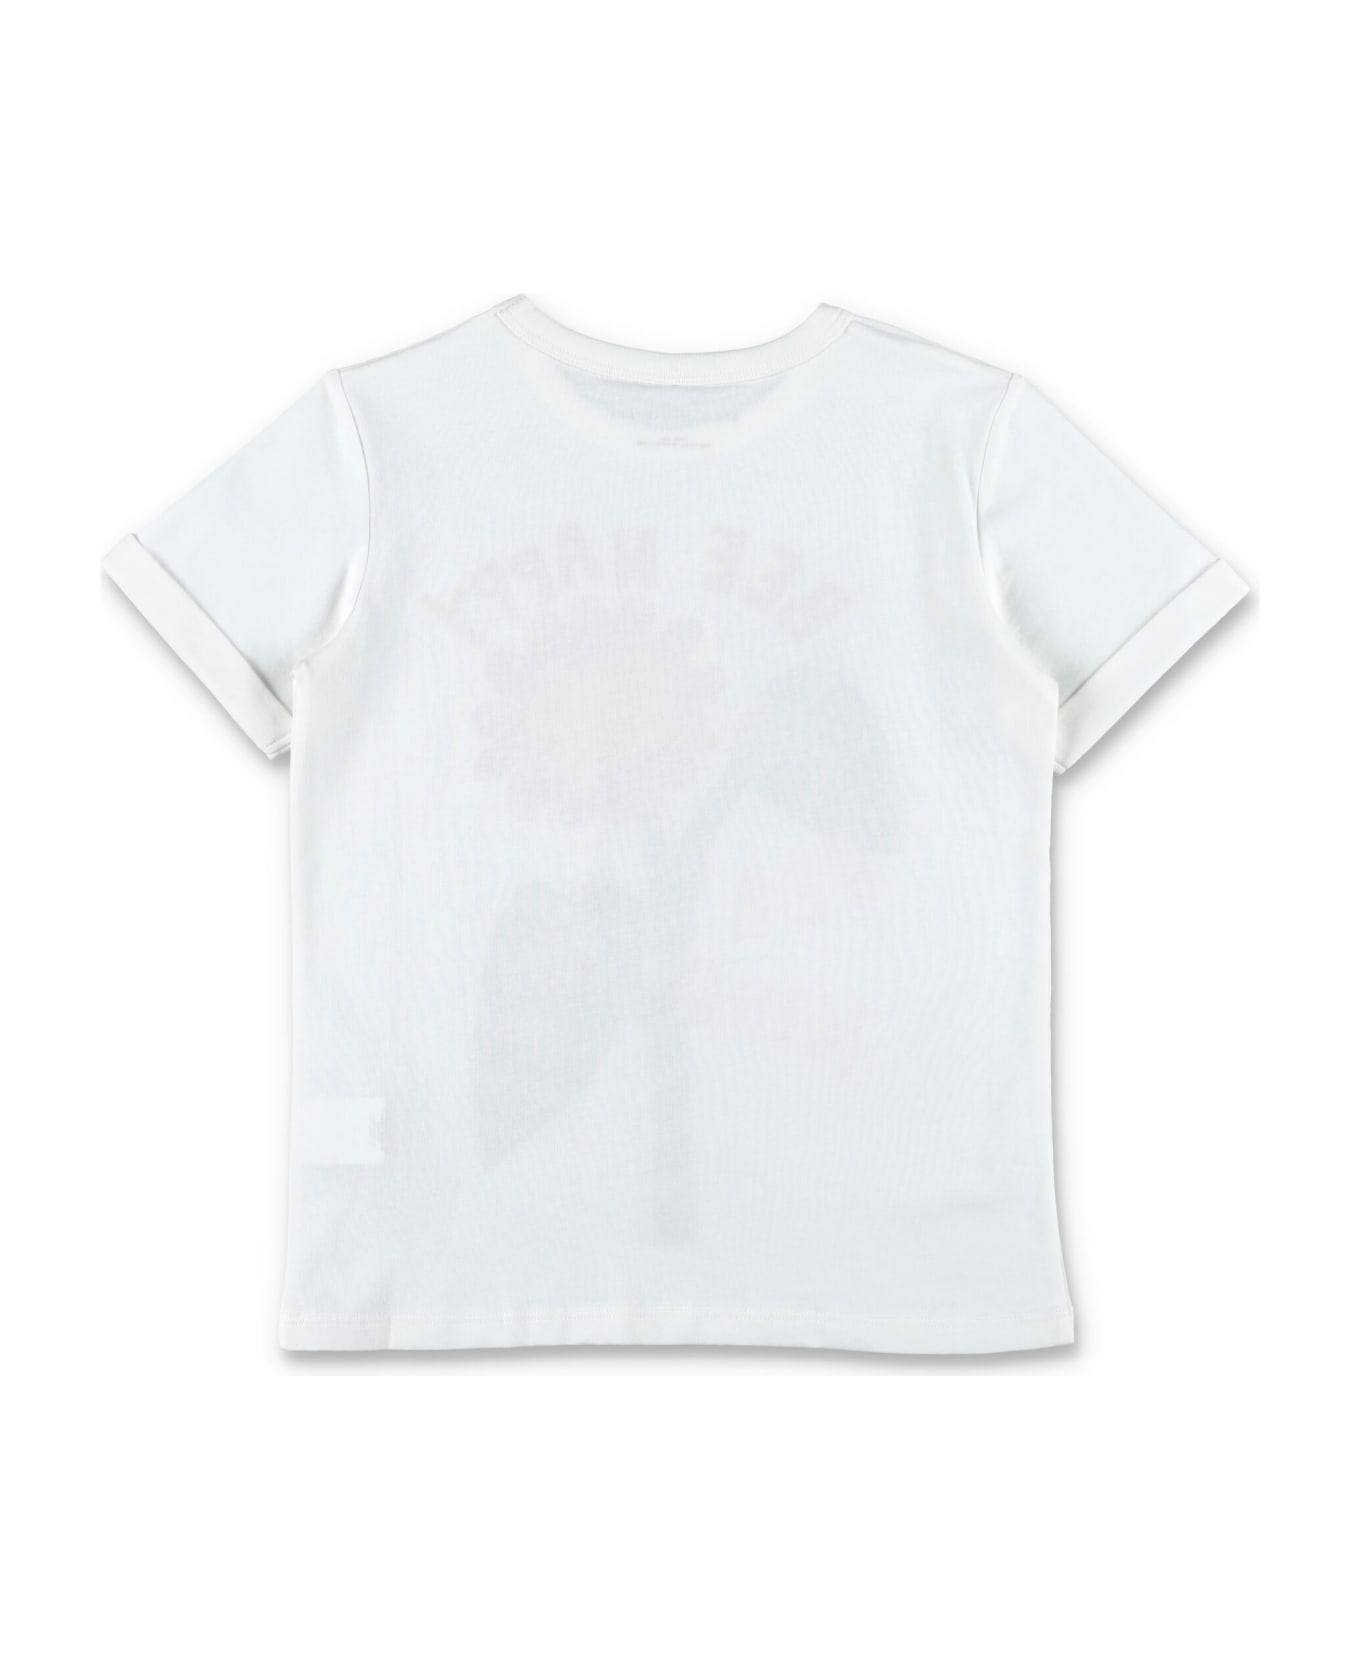 Stella McCartney Kids Bee Happy T-shirt - WHITE